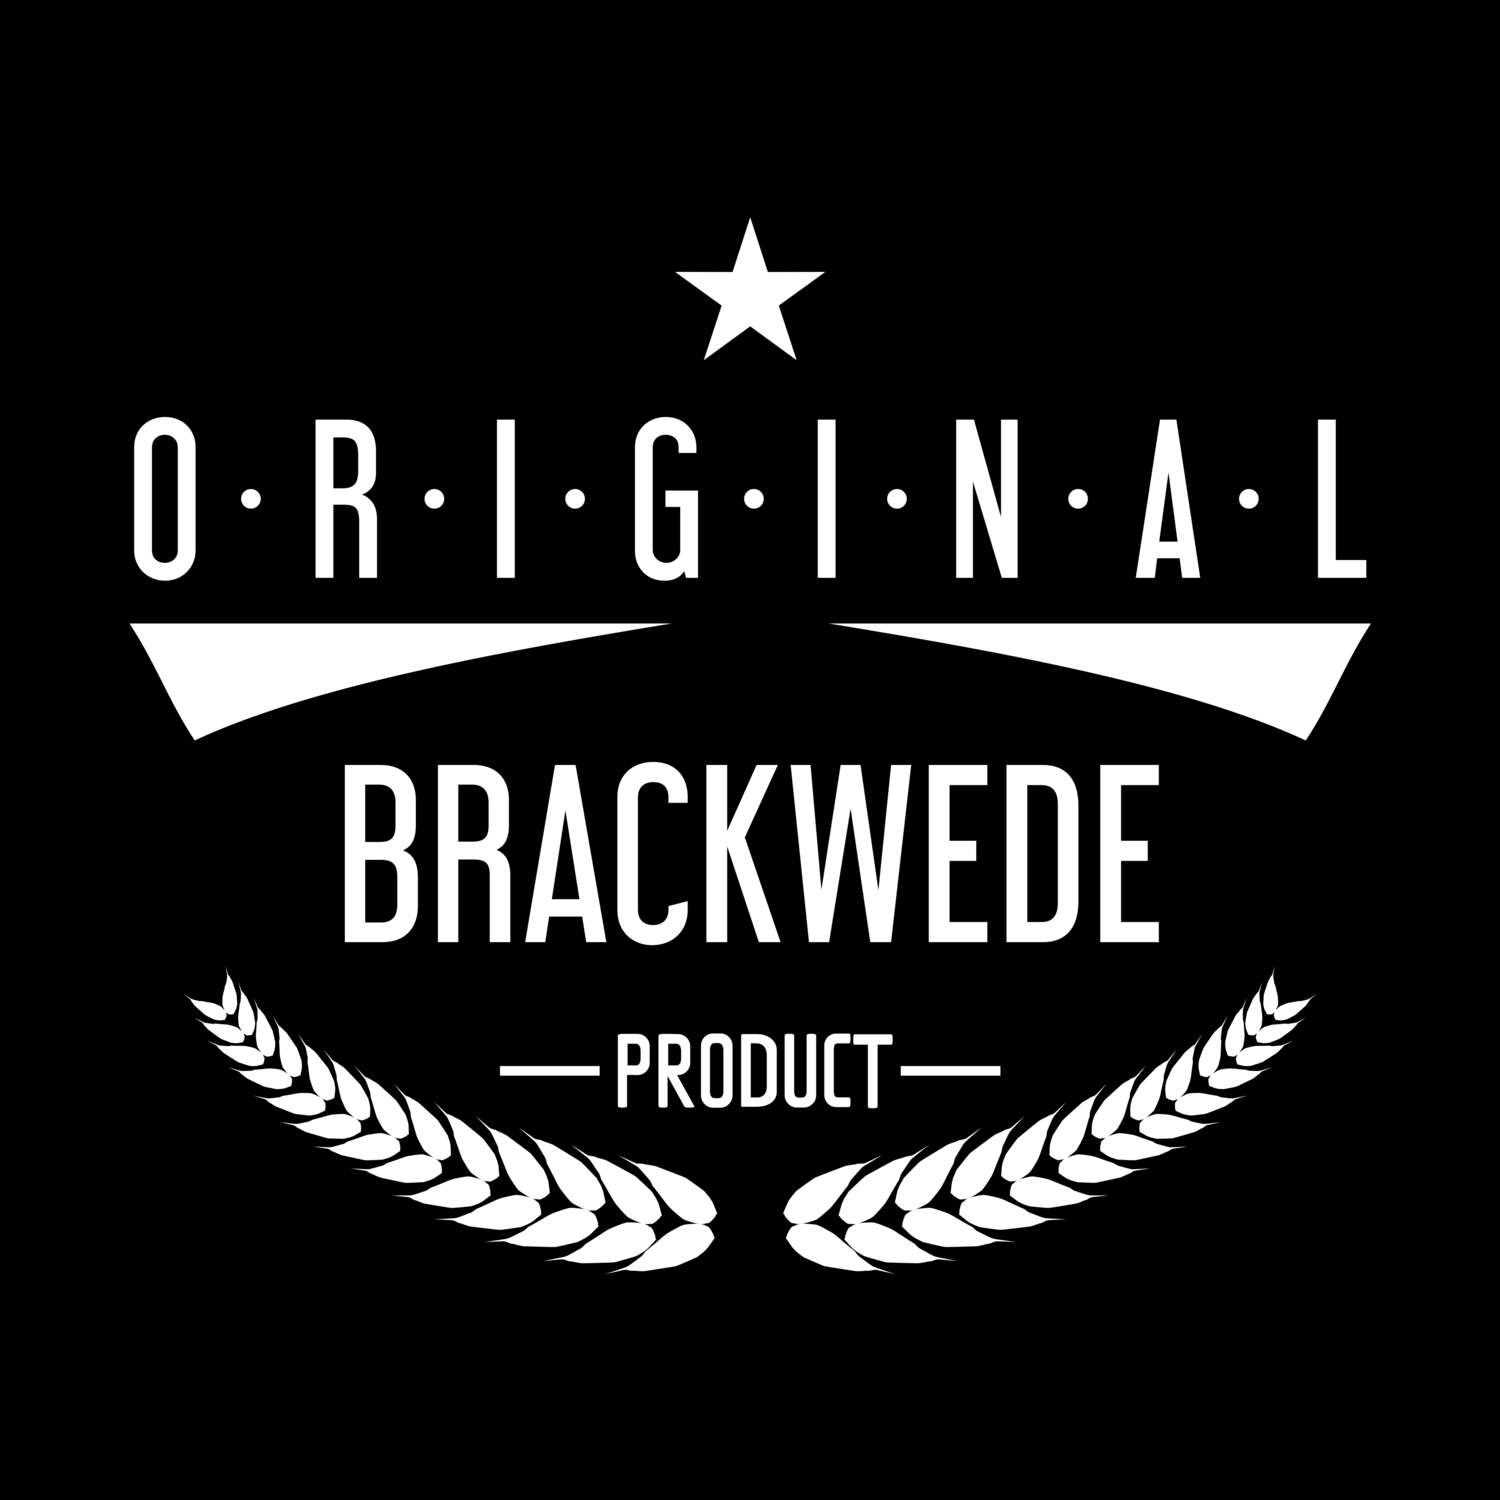 Brackwede T-Shirt »Original Product«